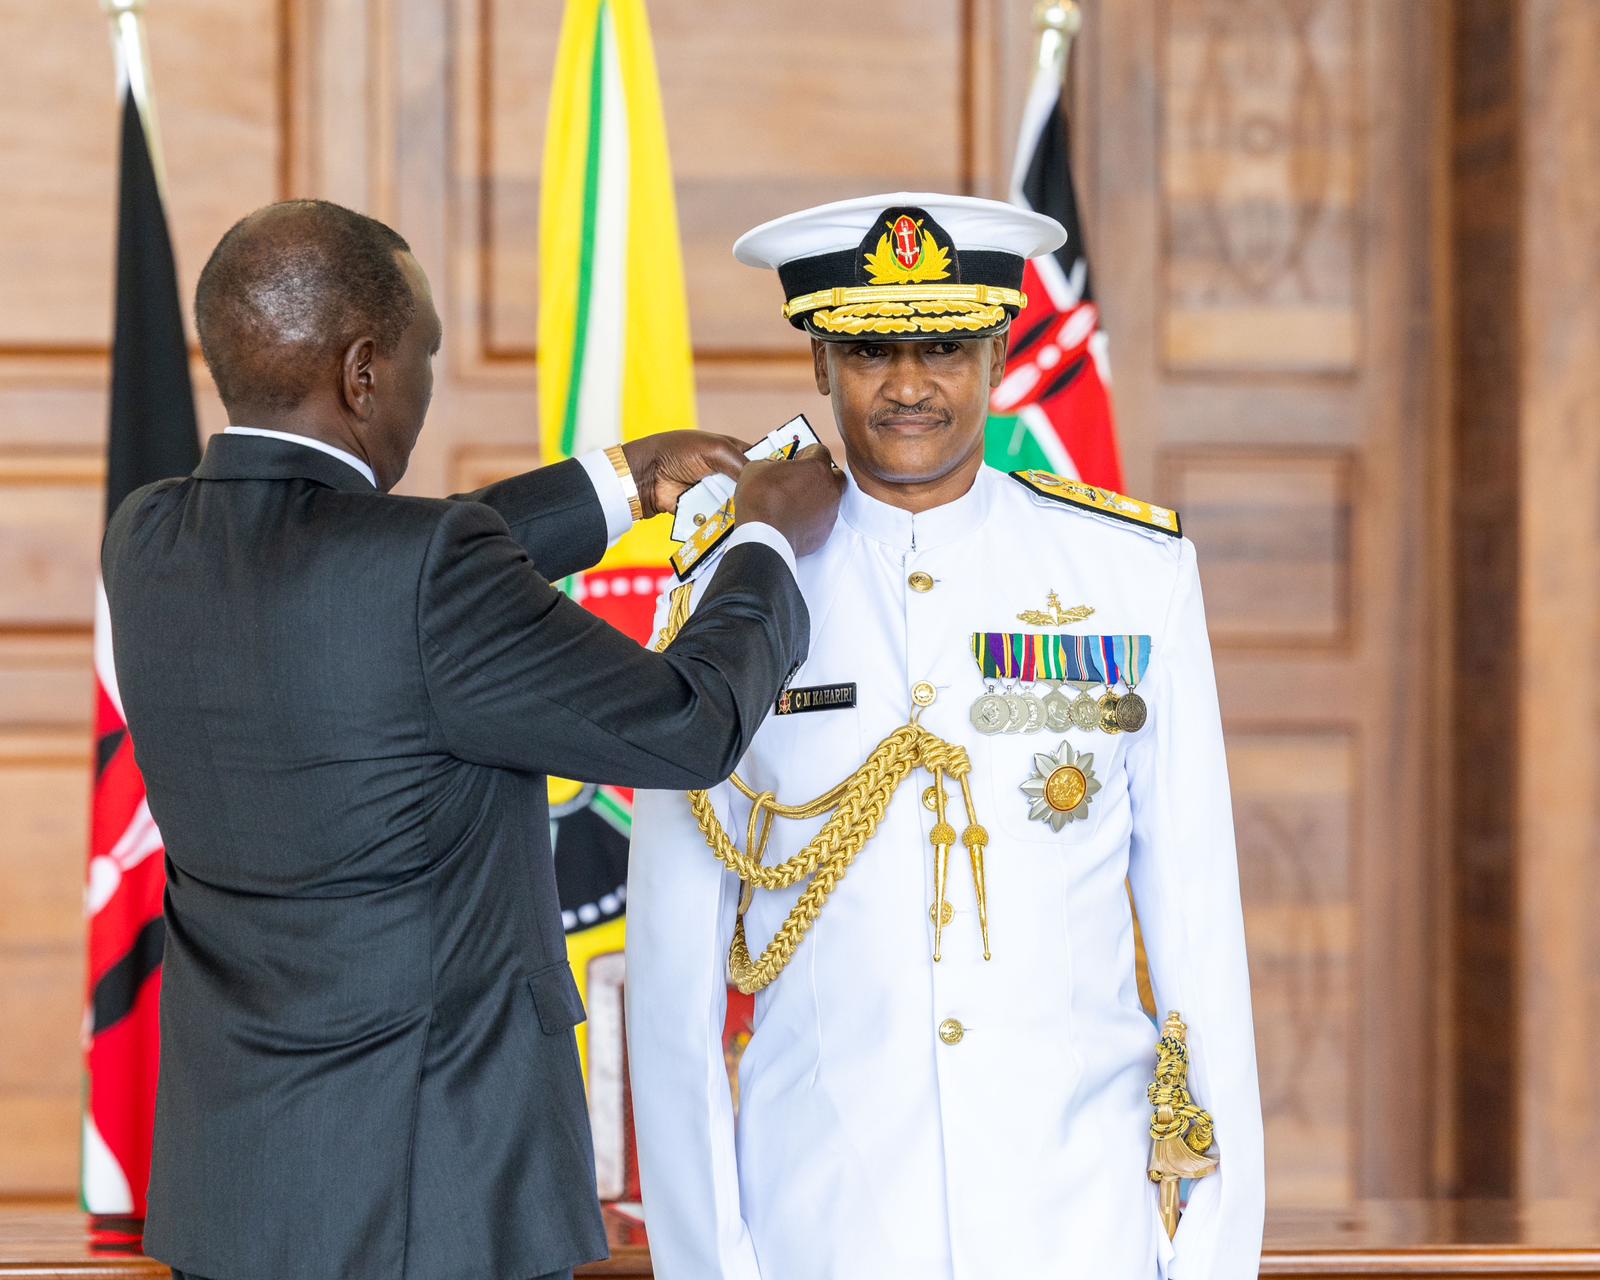 Charles Kahariri sworn in as new Chief of Kenya Defence Forces